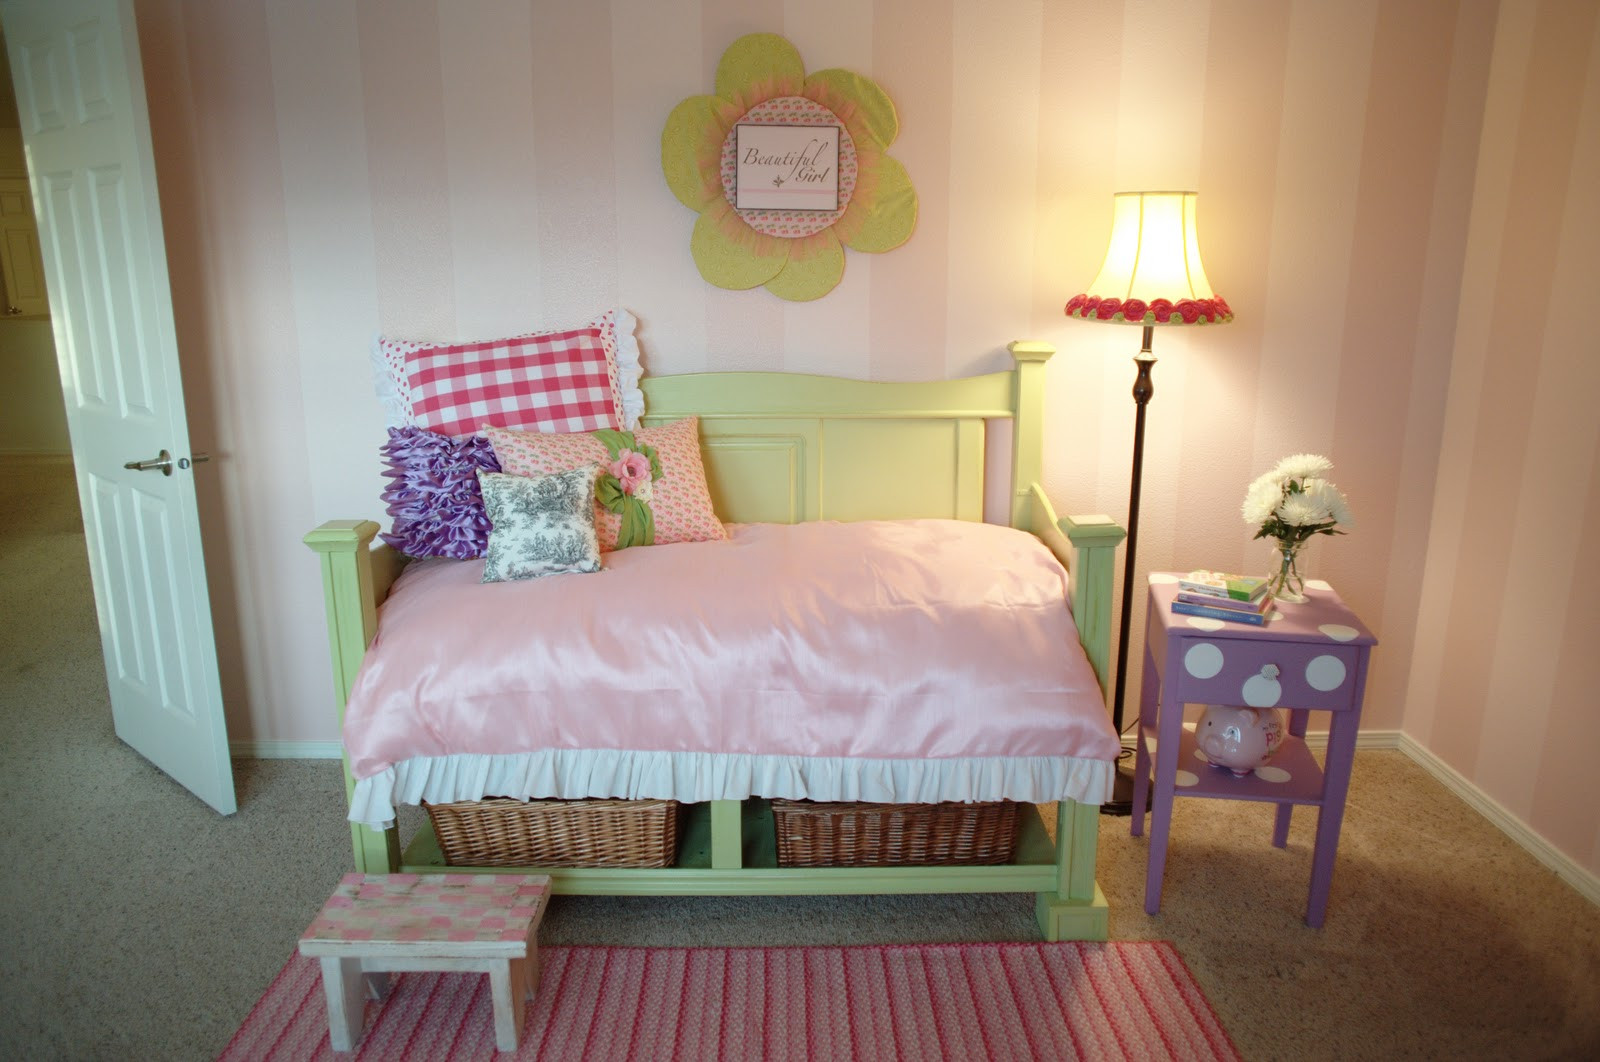 DIY Toddler Bed
 Just Between Friends Toddler Bed Tutorial